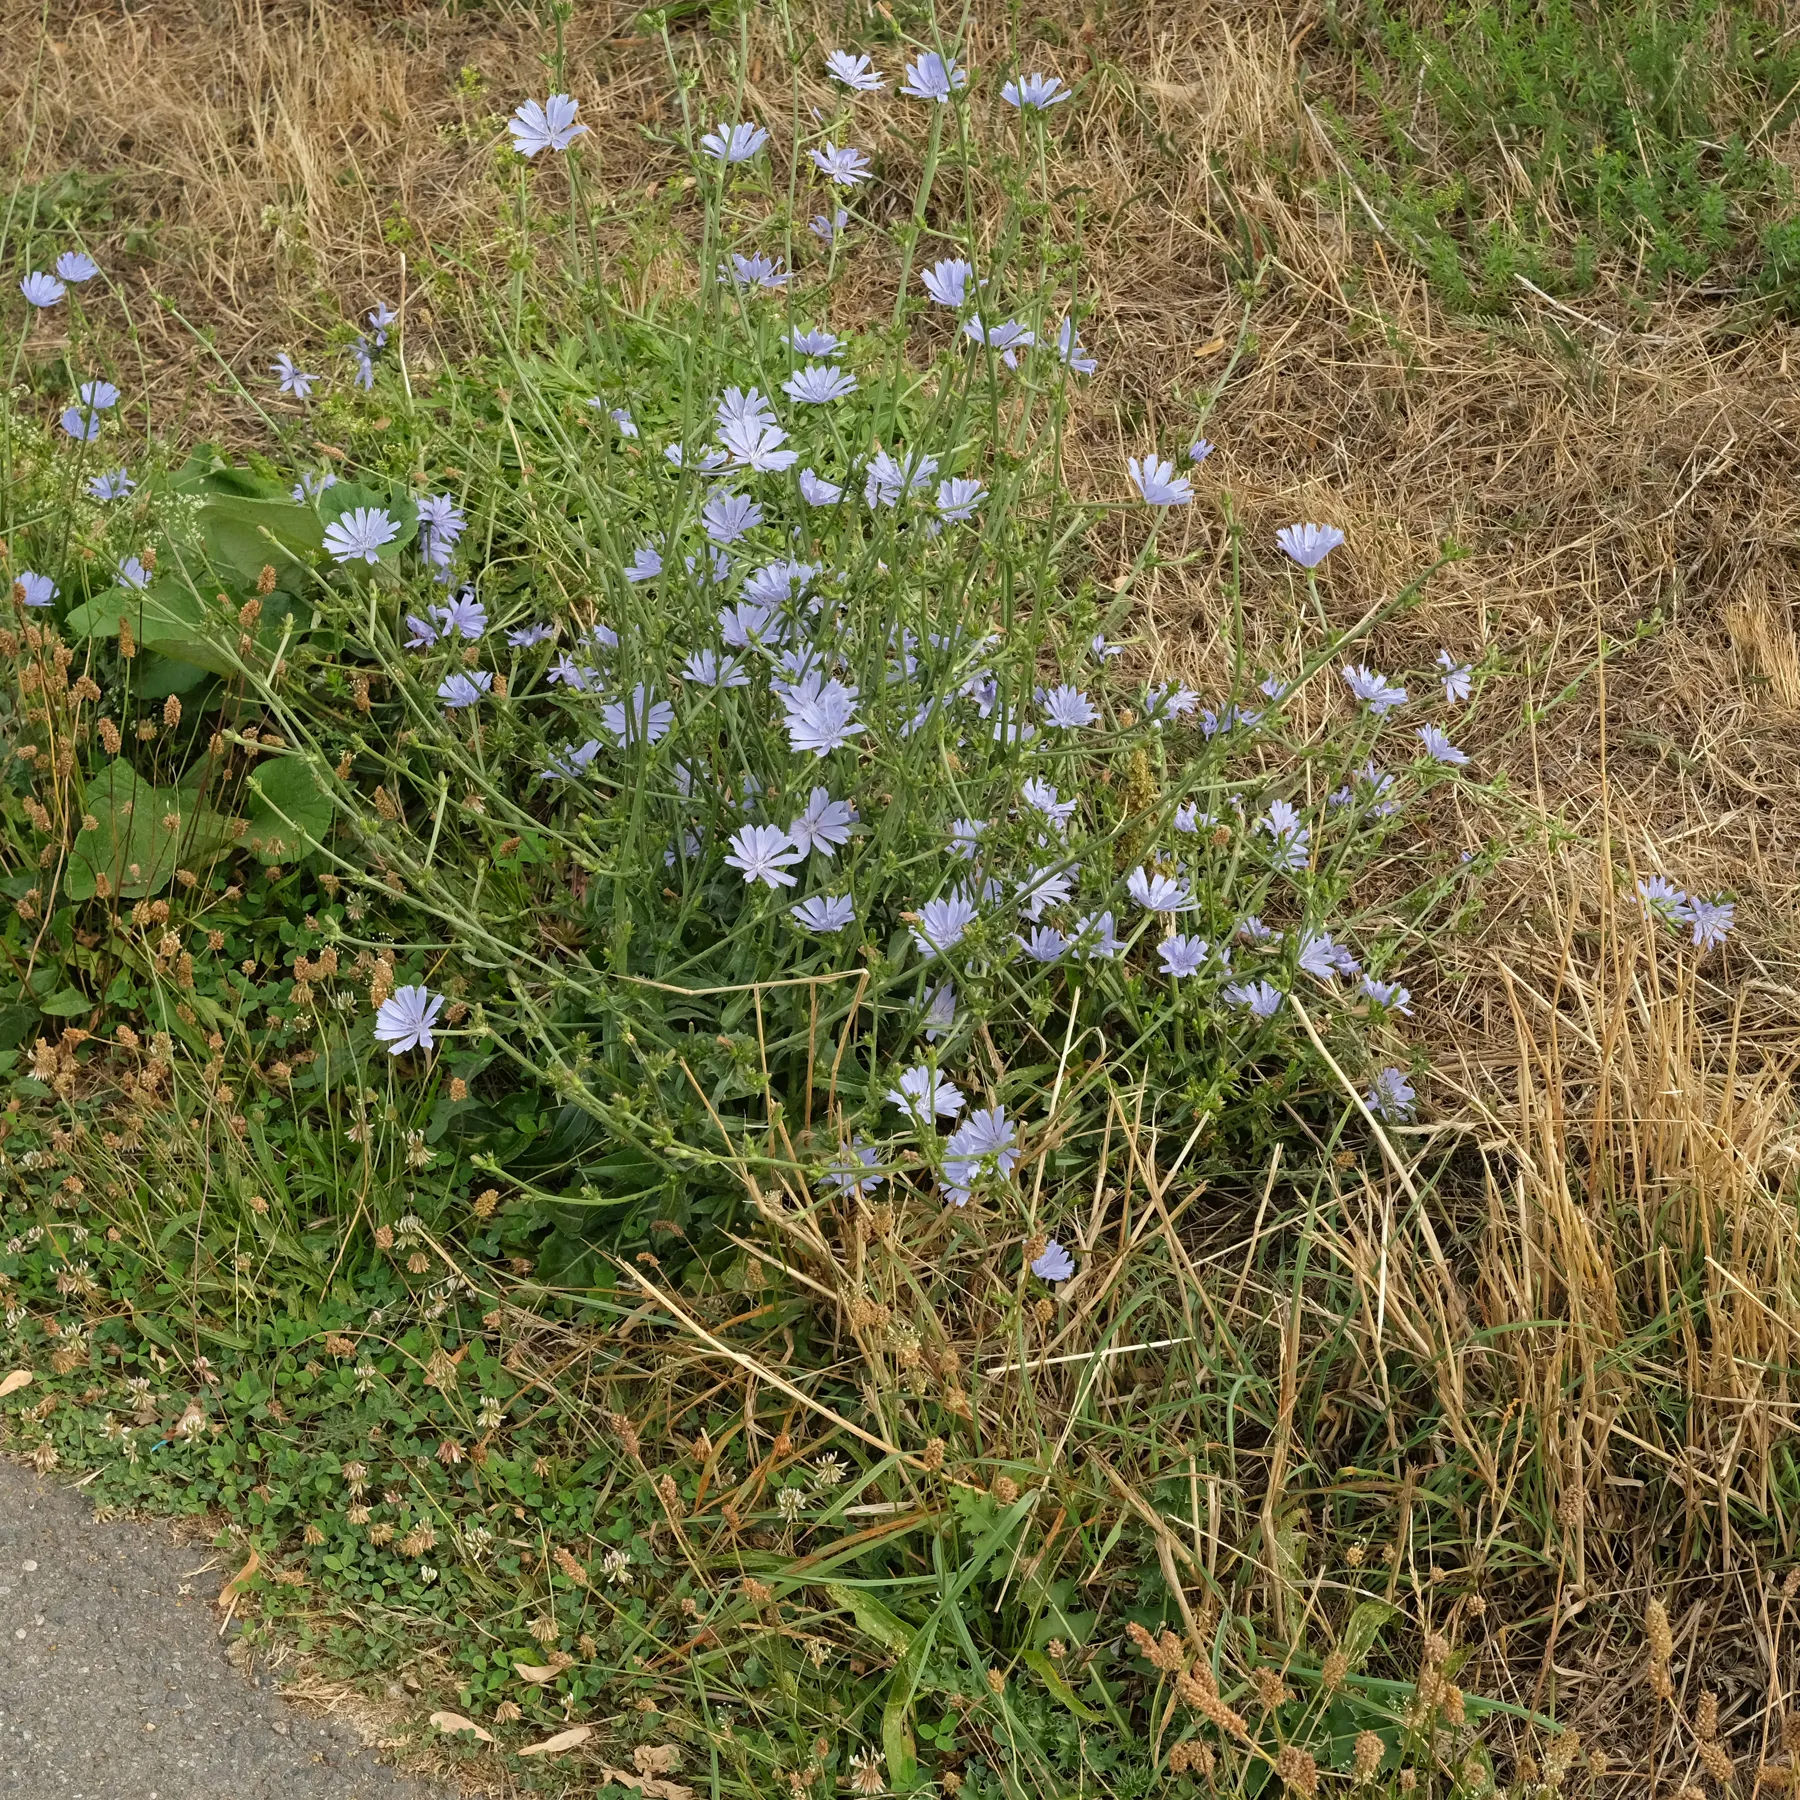 Chicory along the wayside